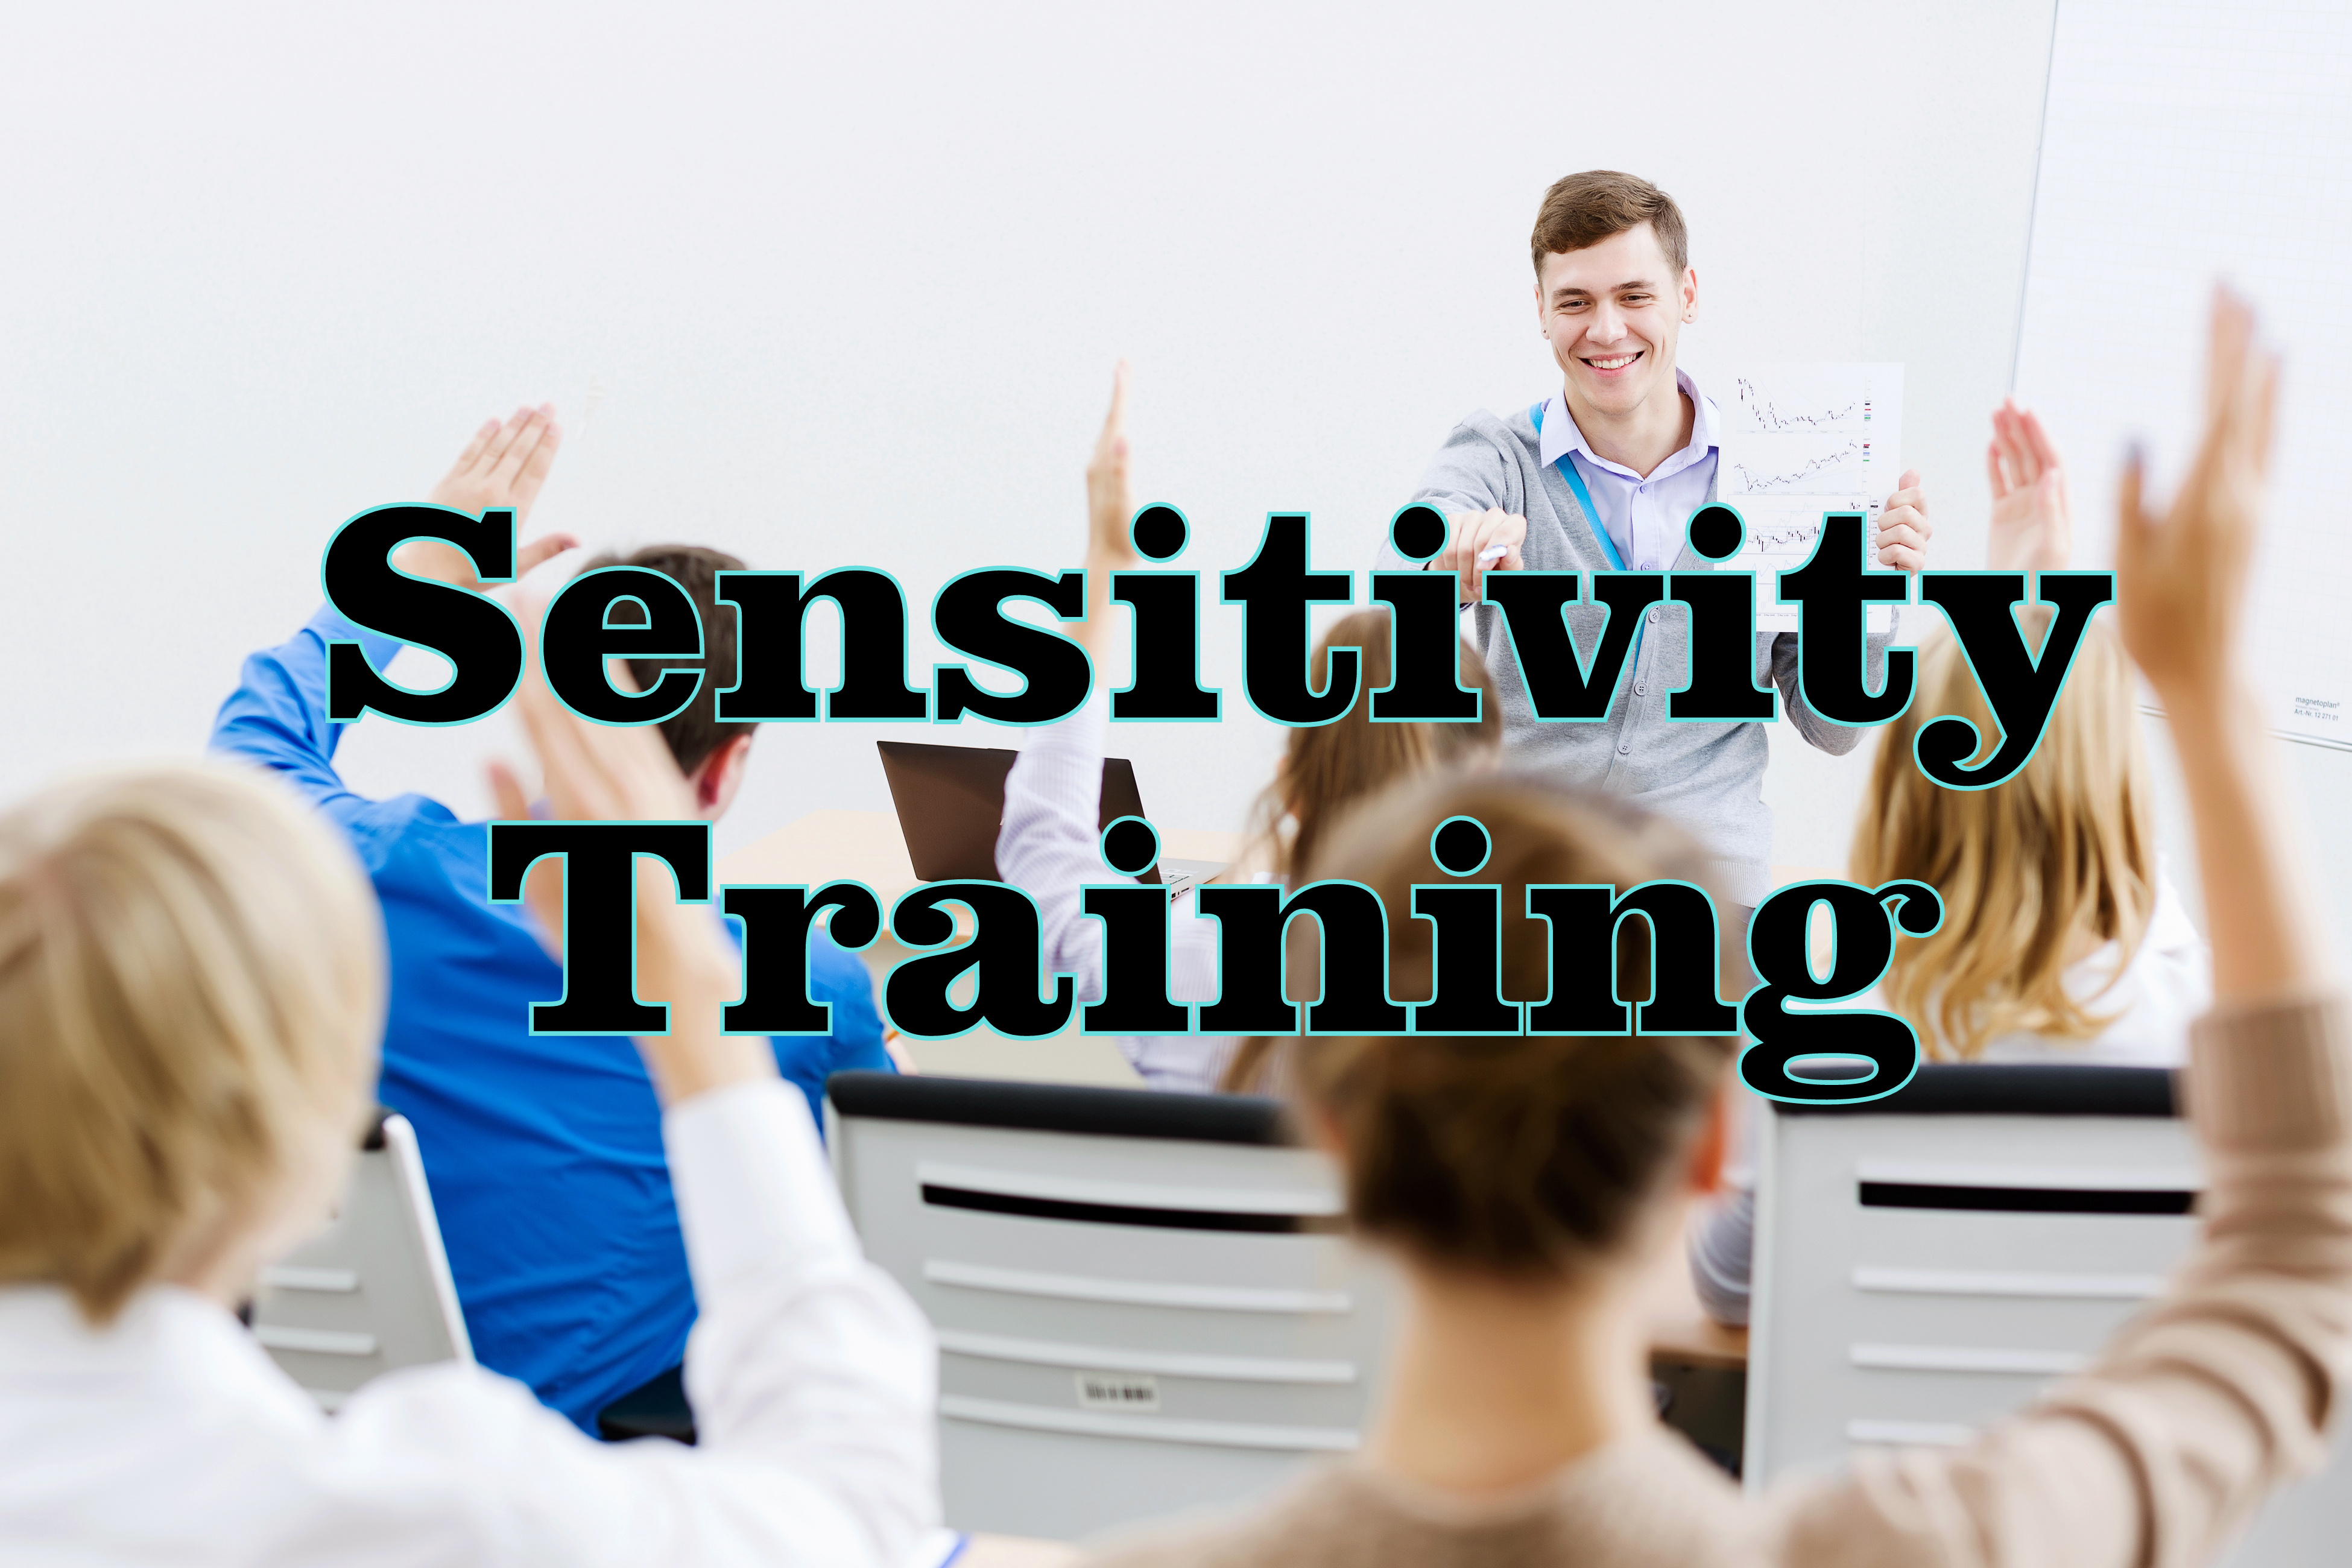 Sensitivity training